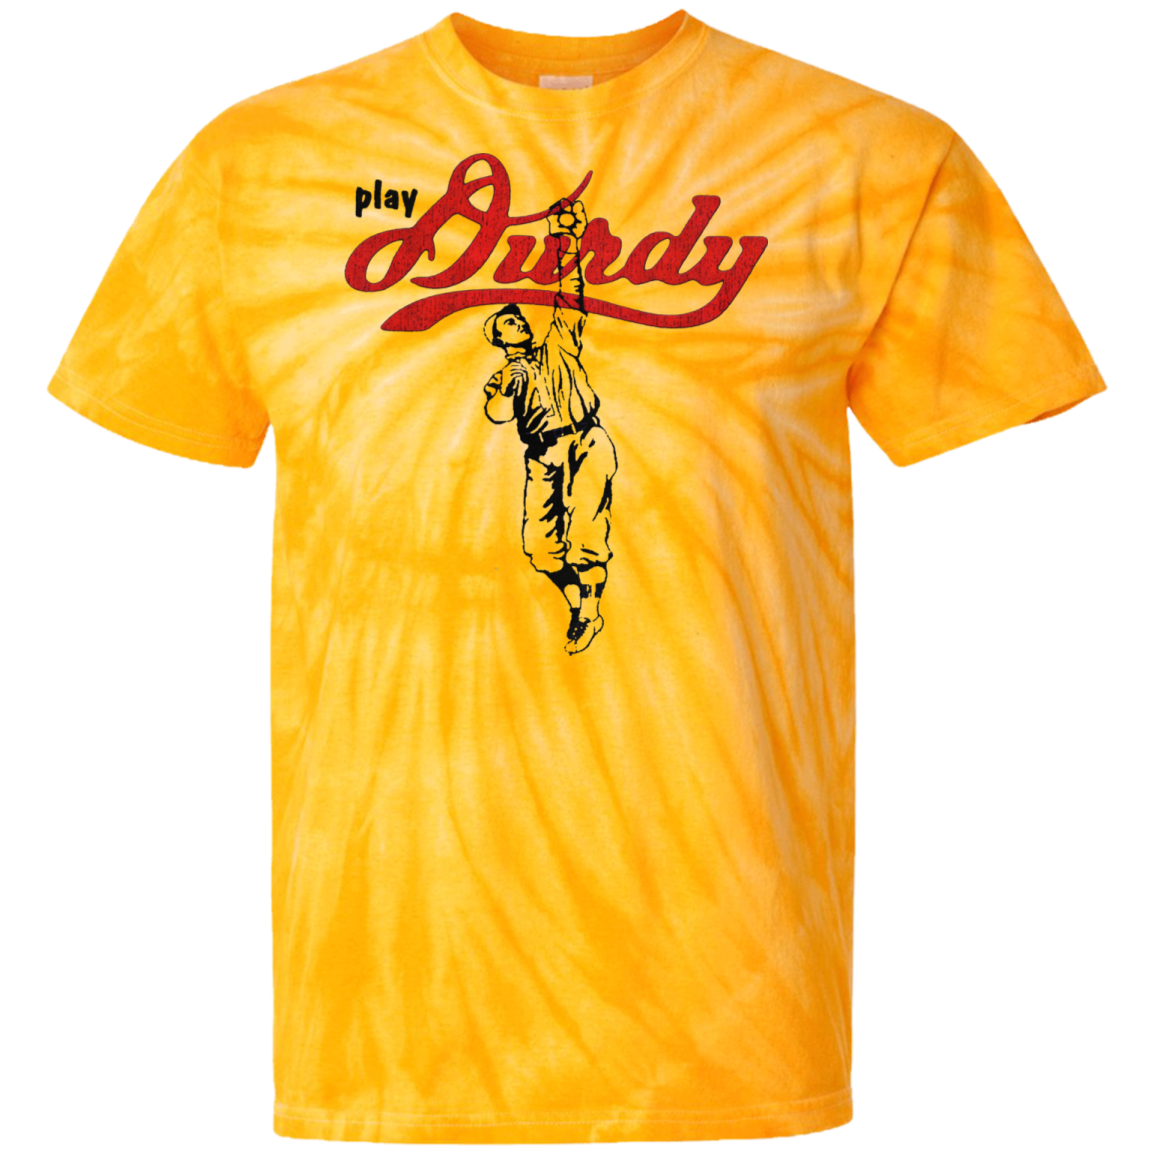 Play Durdy 100% Cotton Tie Dye T-Shirt